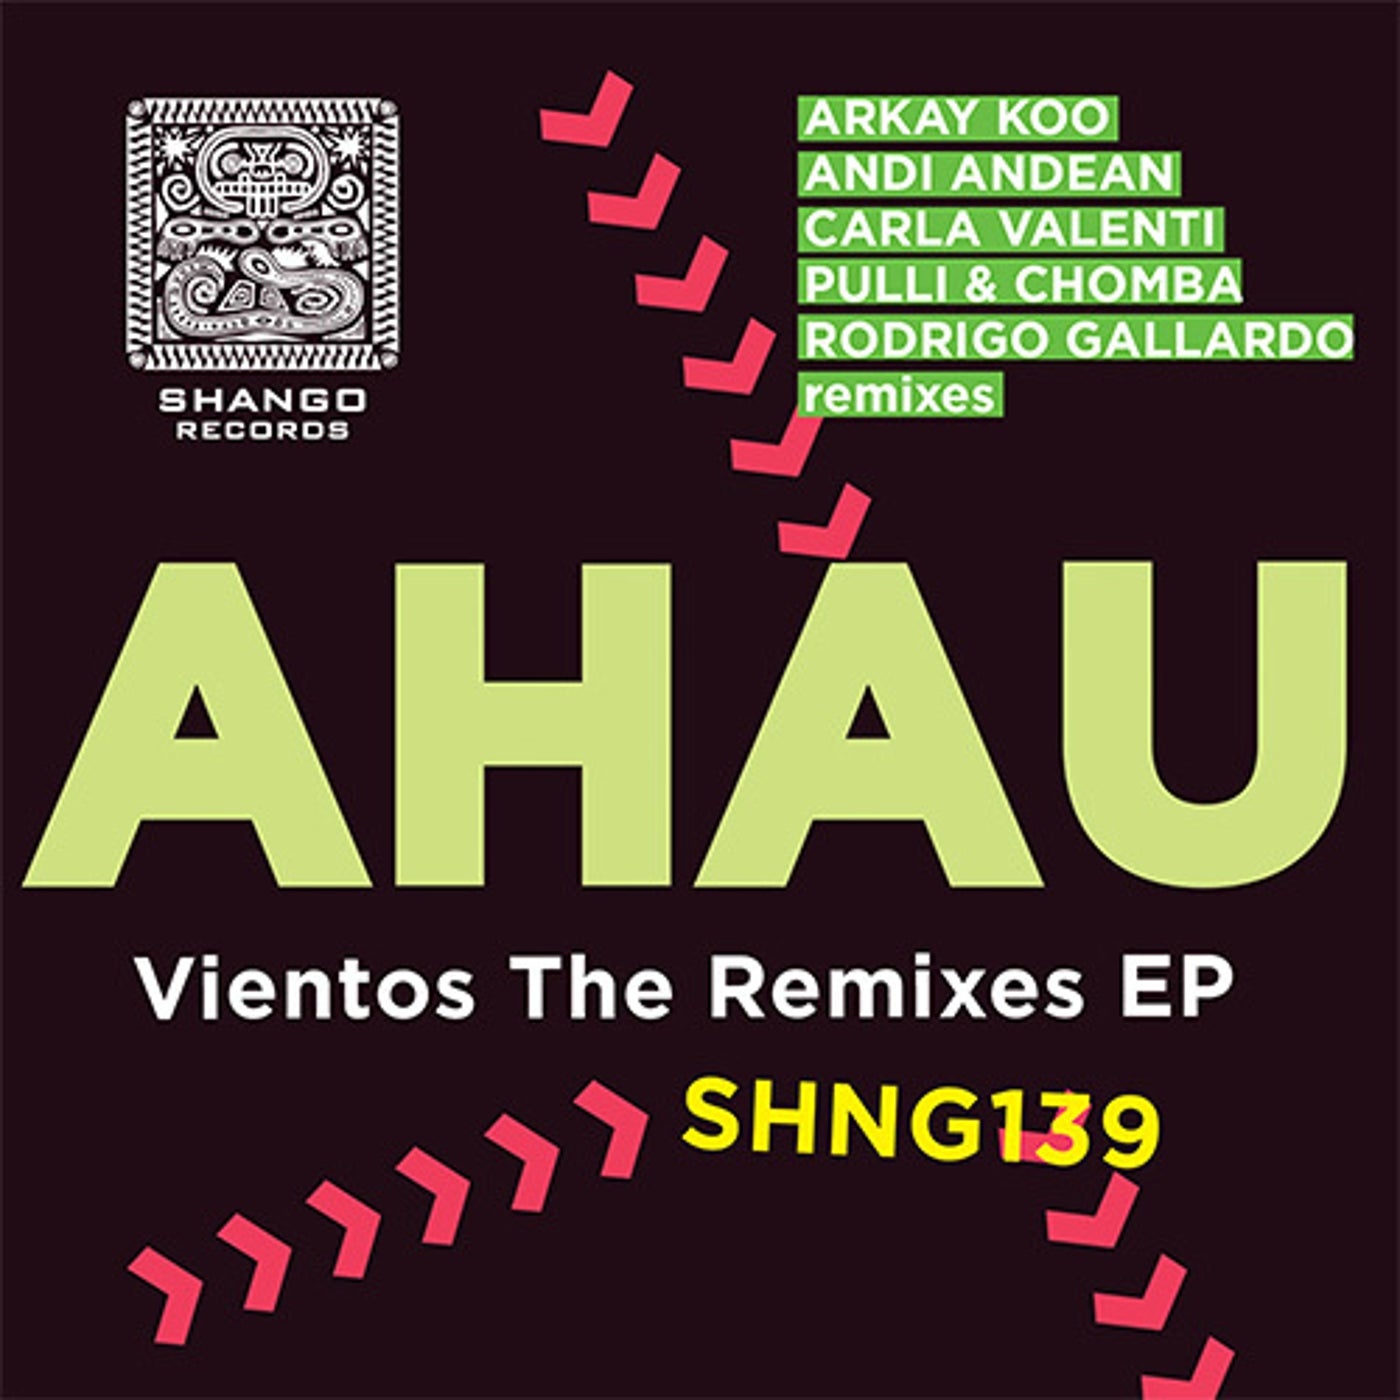 Ahau - Vientos The Remixes EP [SHNG139]